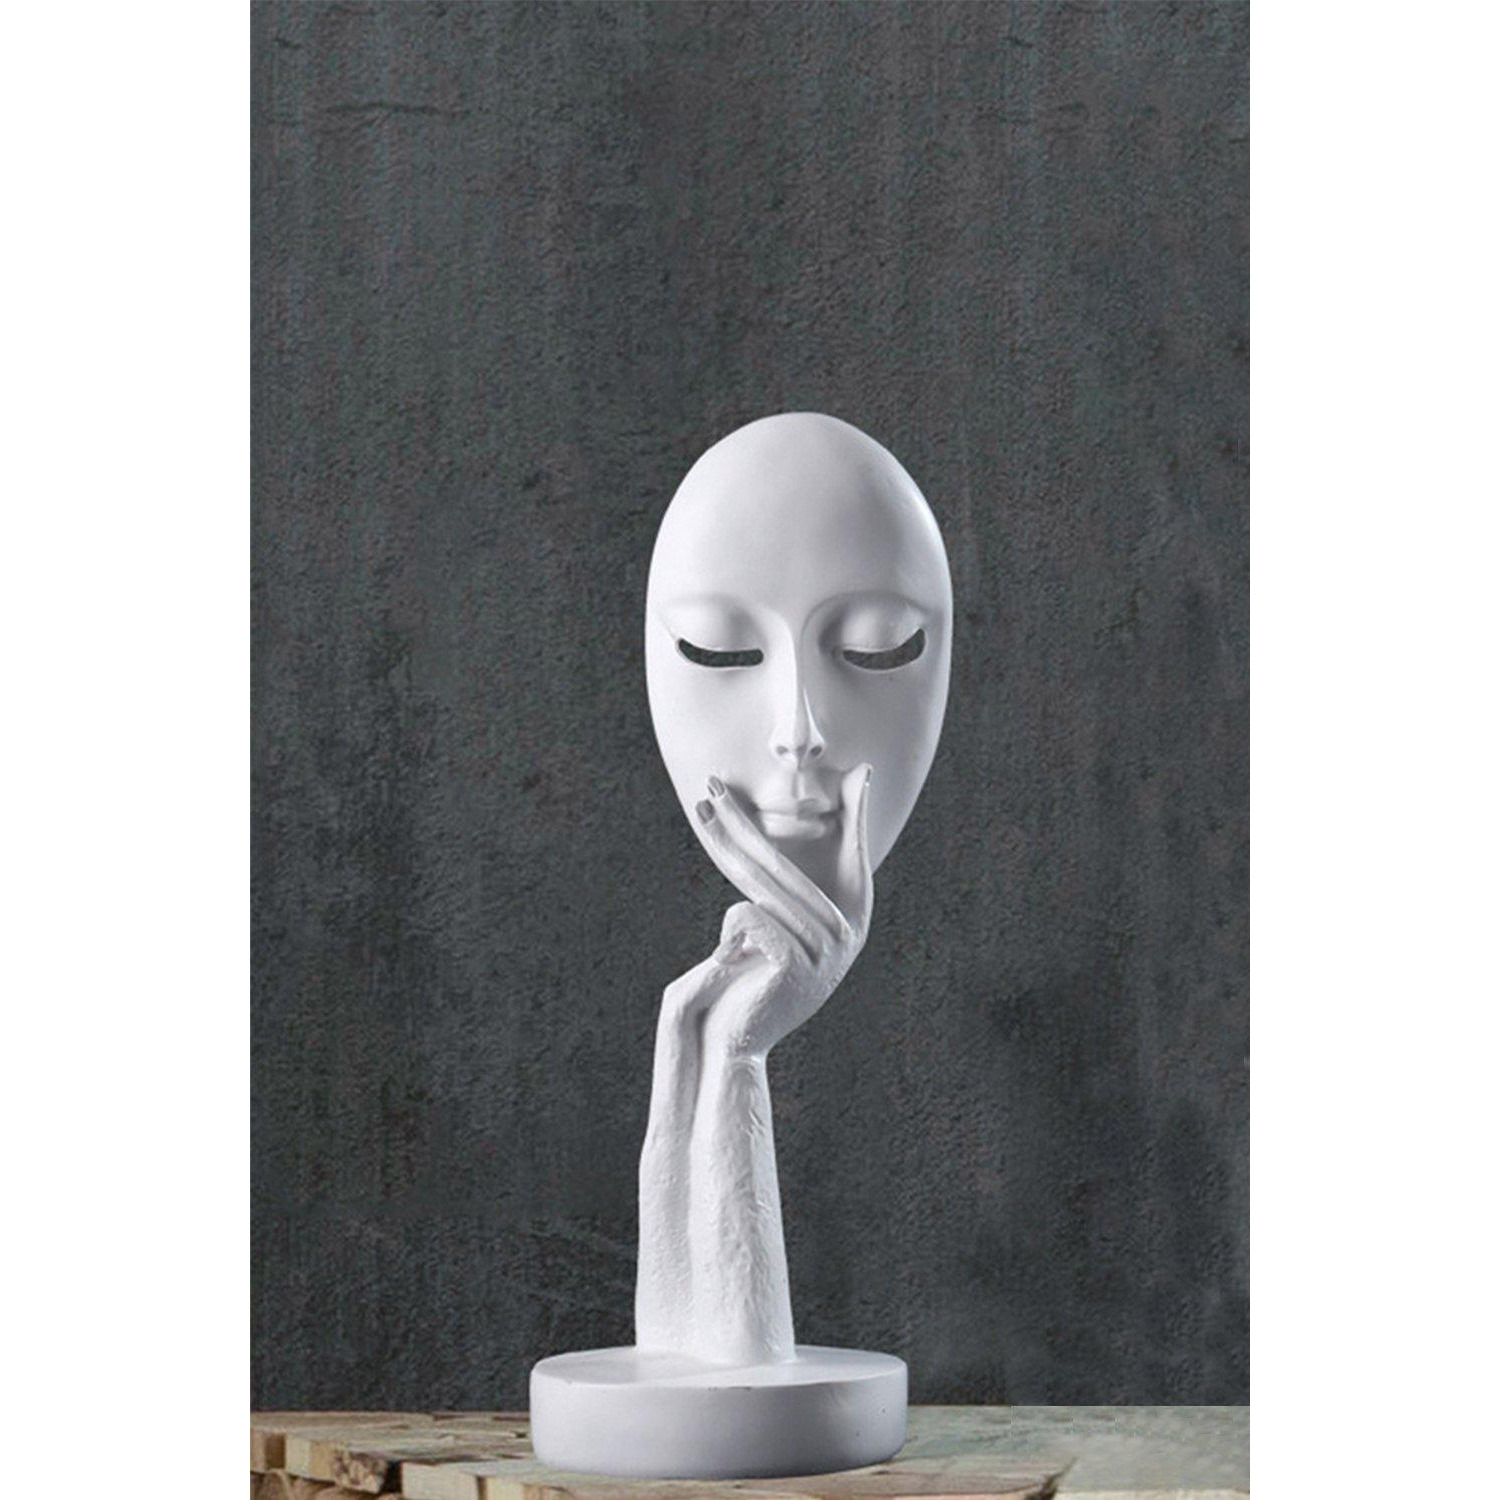 10cm Dia x 29cm H Abstract Art Meditation Sculpture Resin Mask Ornaments - image 1